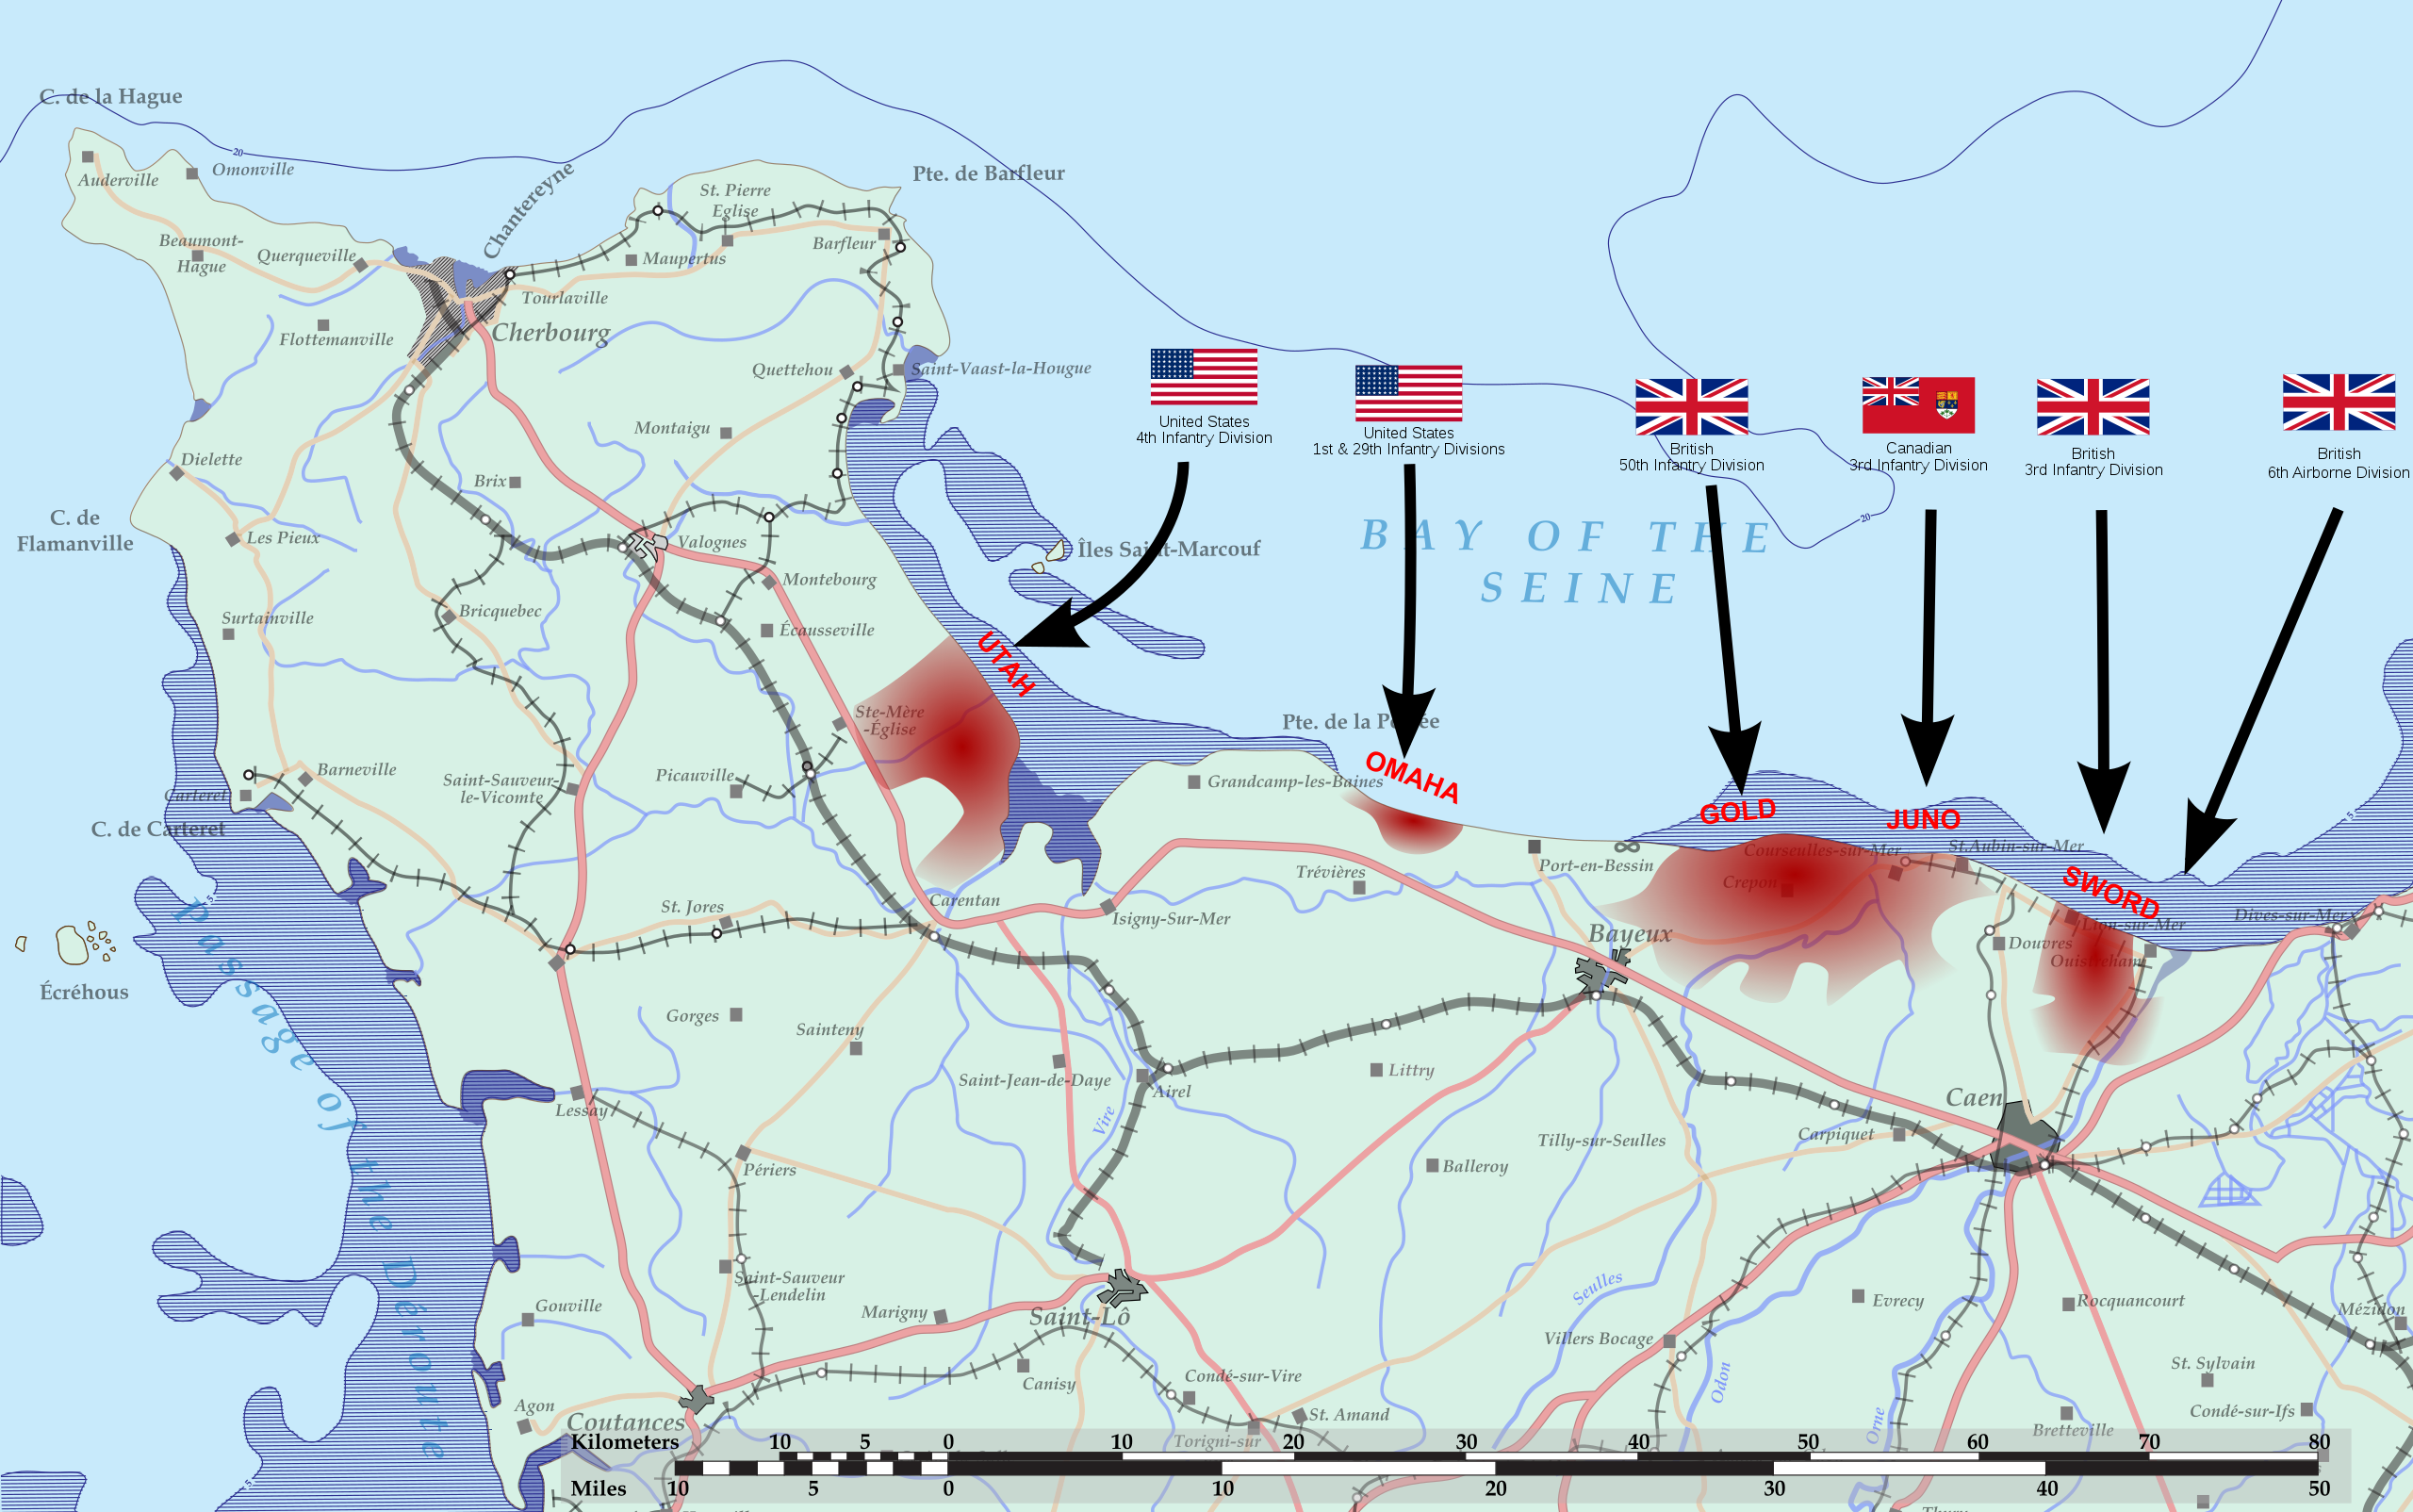 Debarcarea din Normandia (6 iunie – 19 august 1944)